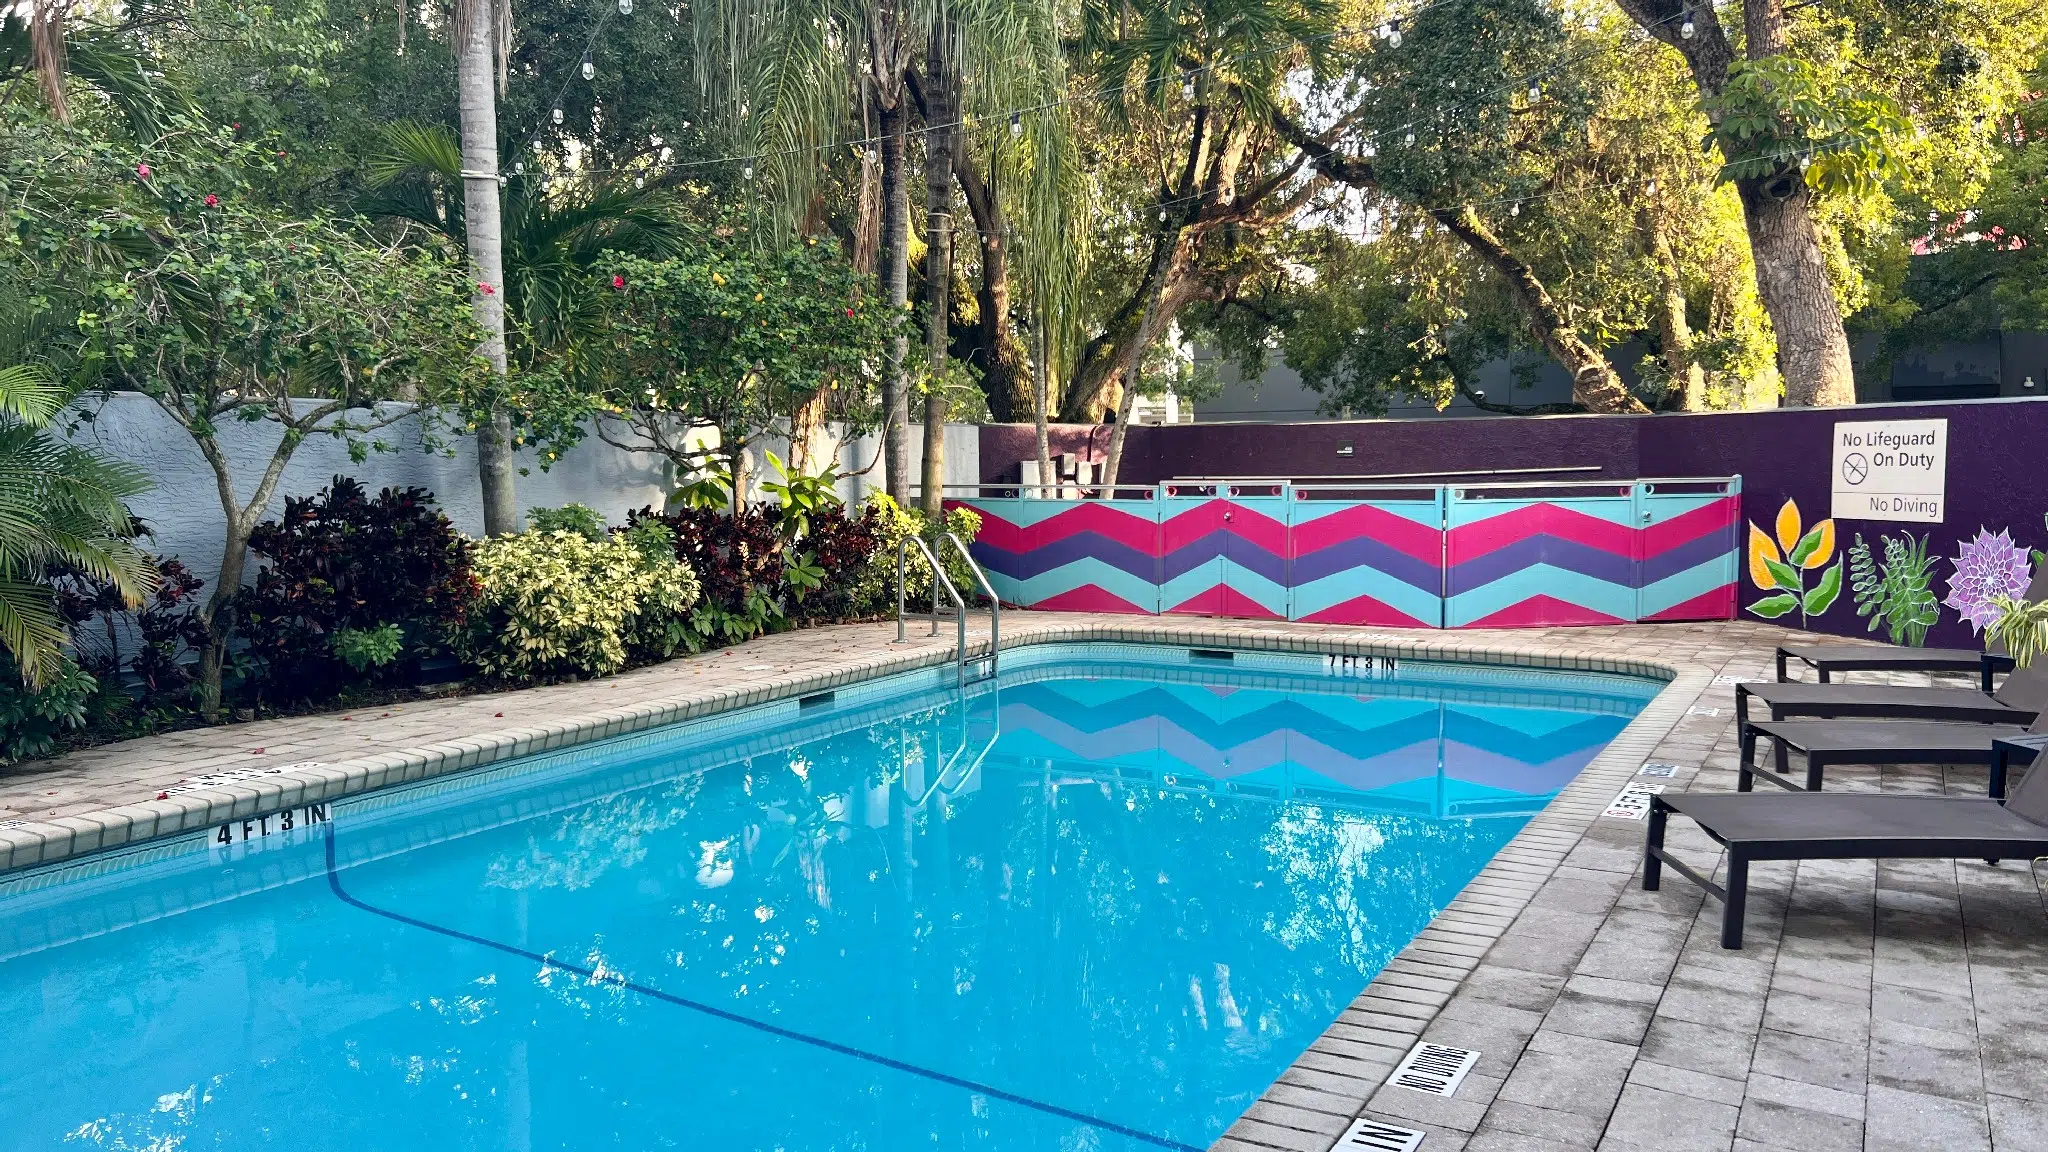 Hampton Inn Miami Coconut Grove pool area